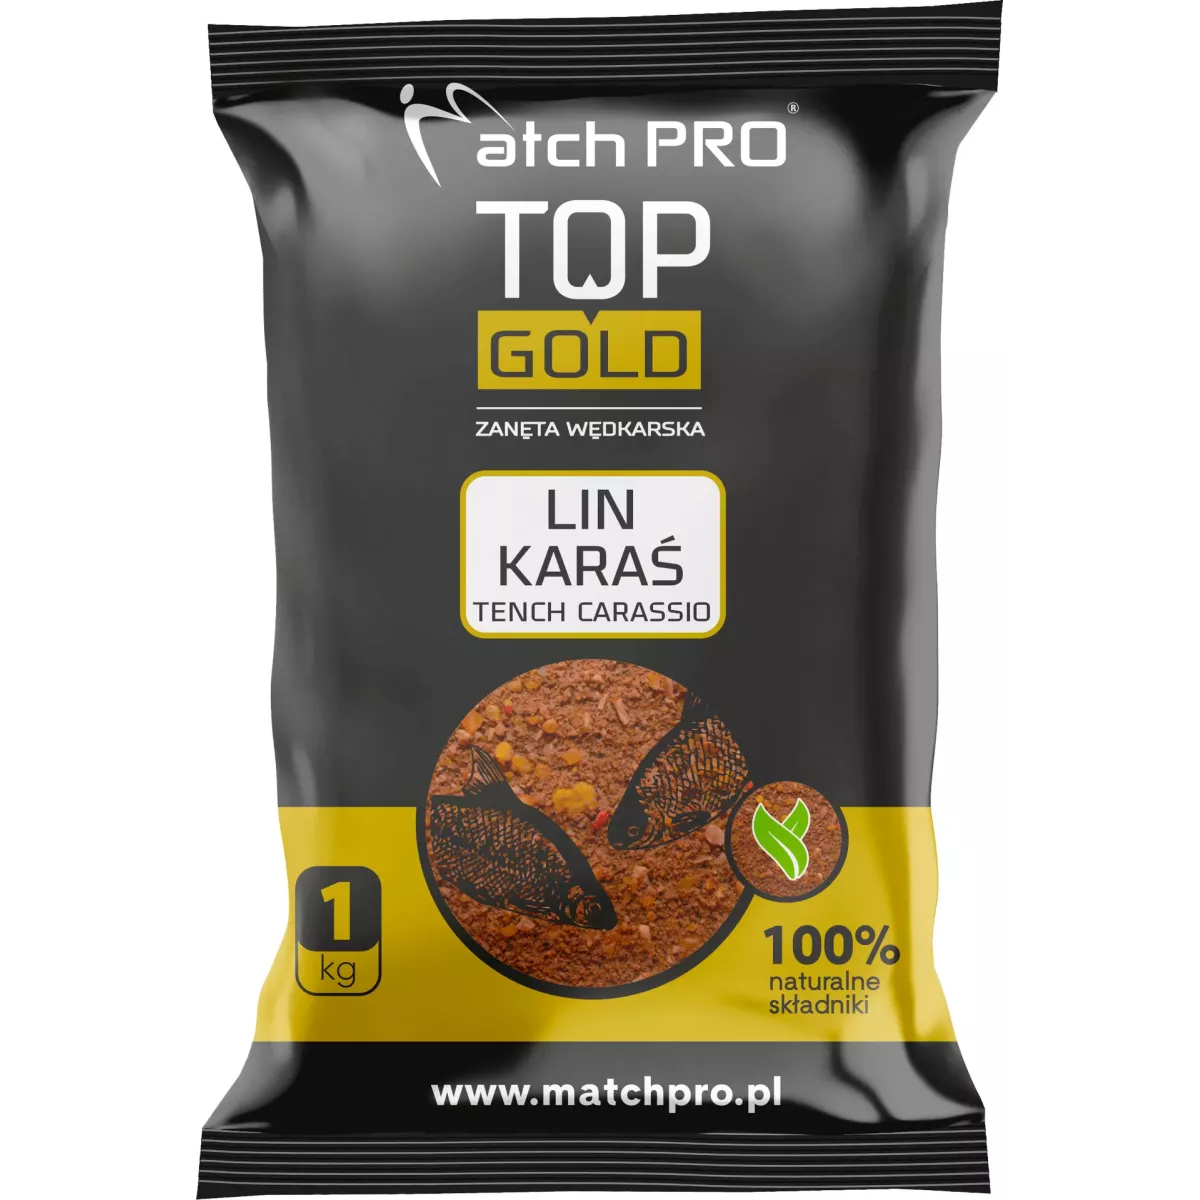 Zanęta MatchPro Top Gold 1kg - LIN KARAŚ